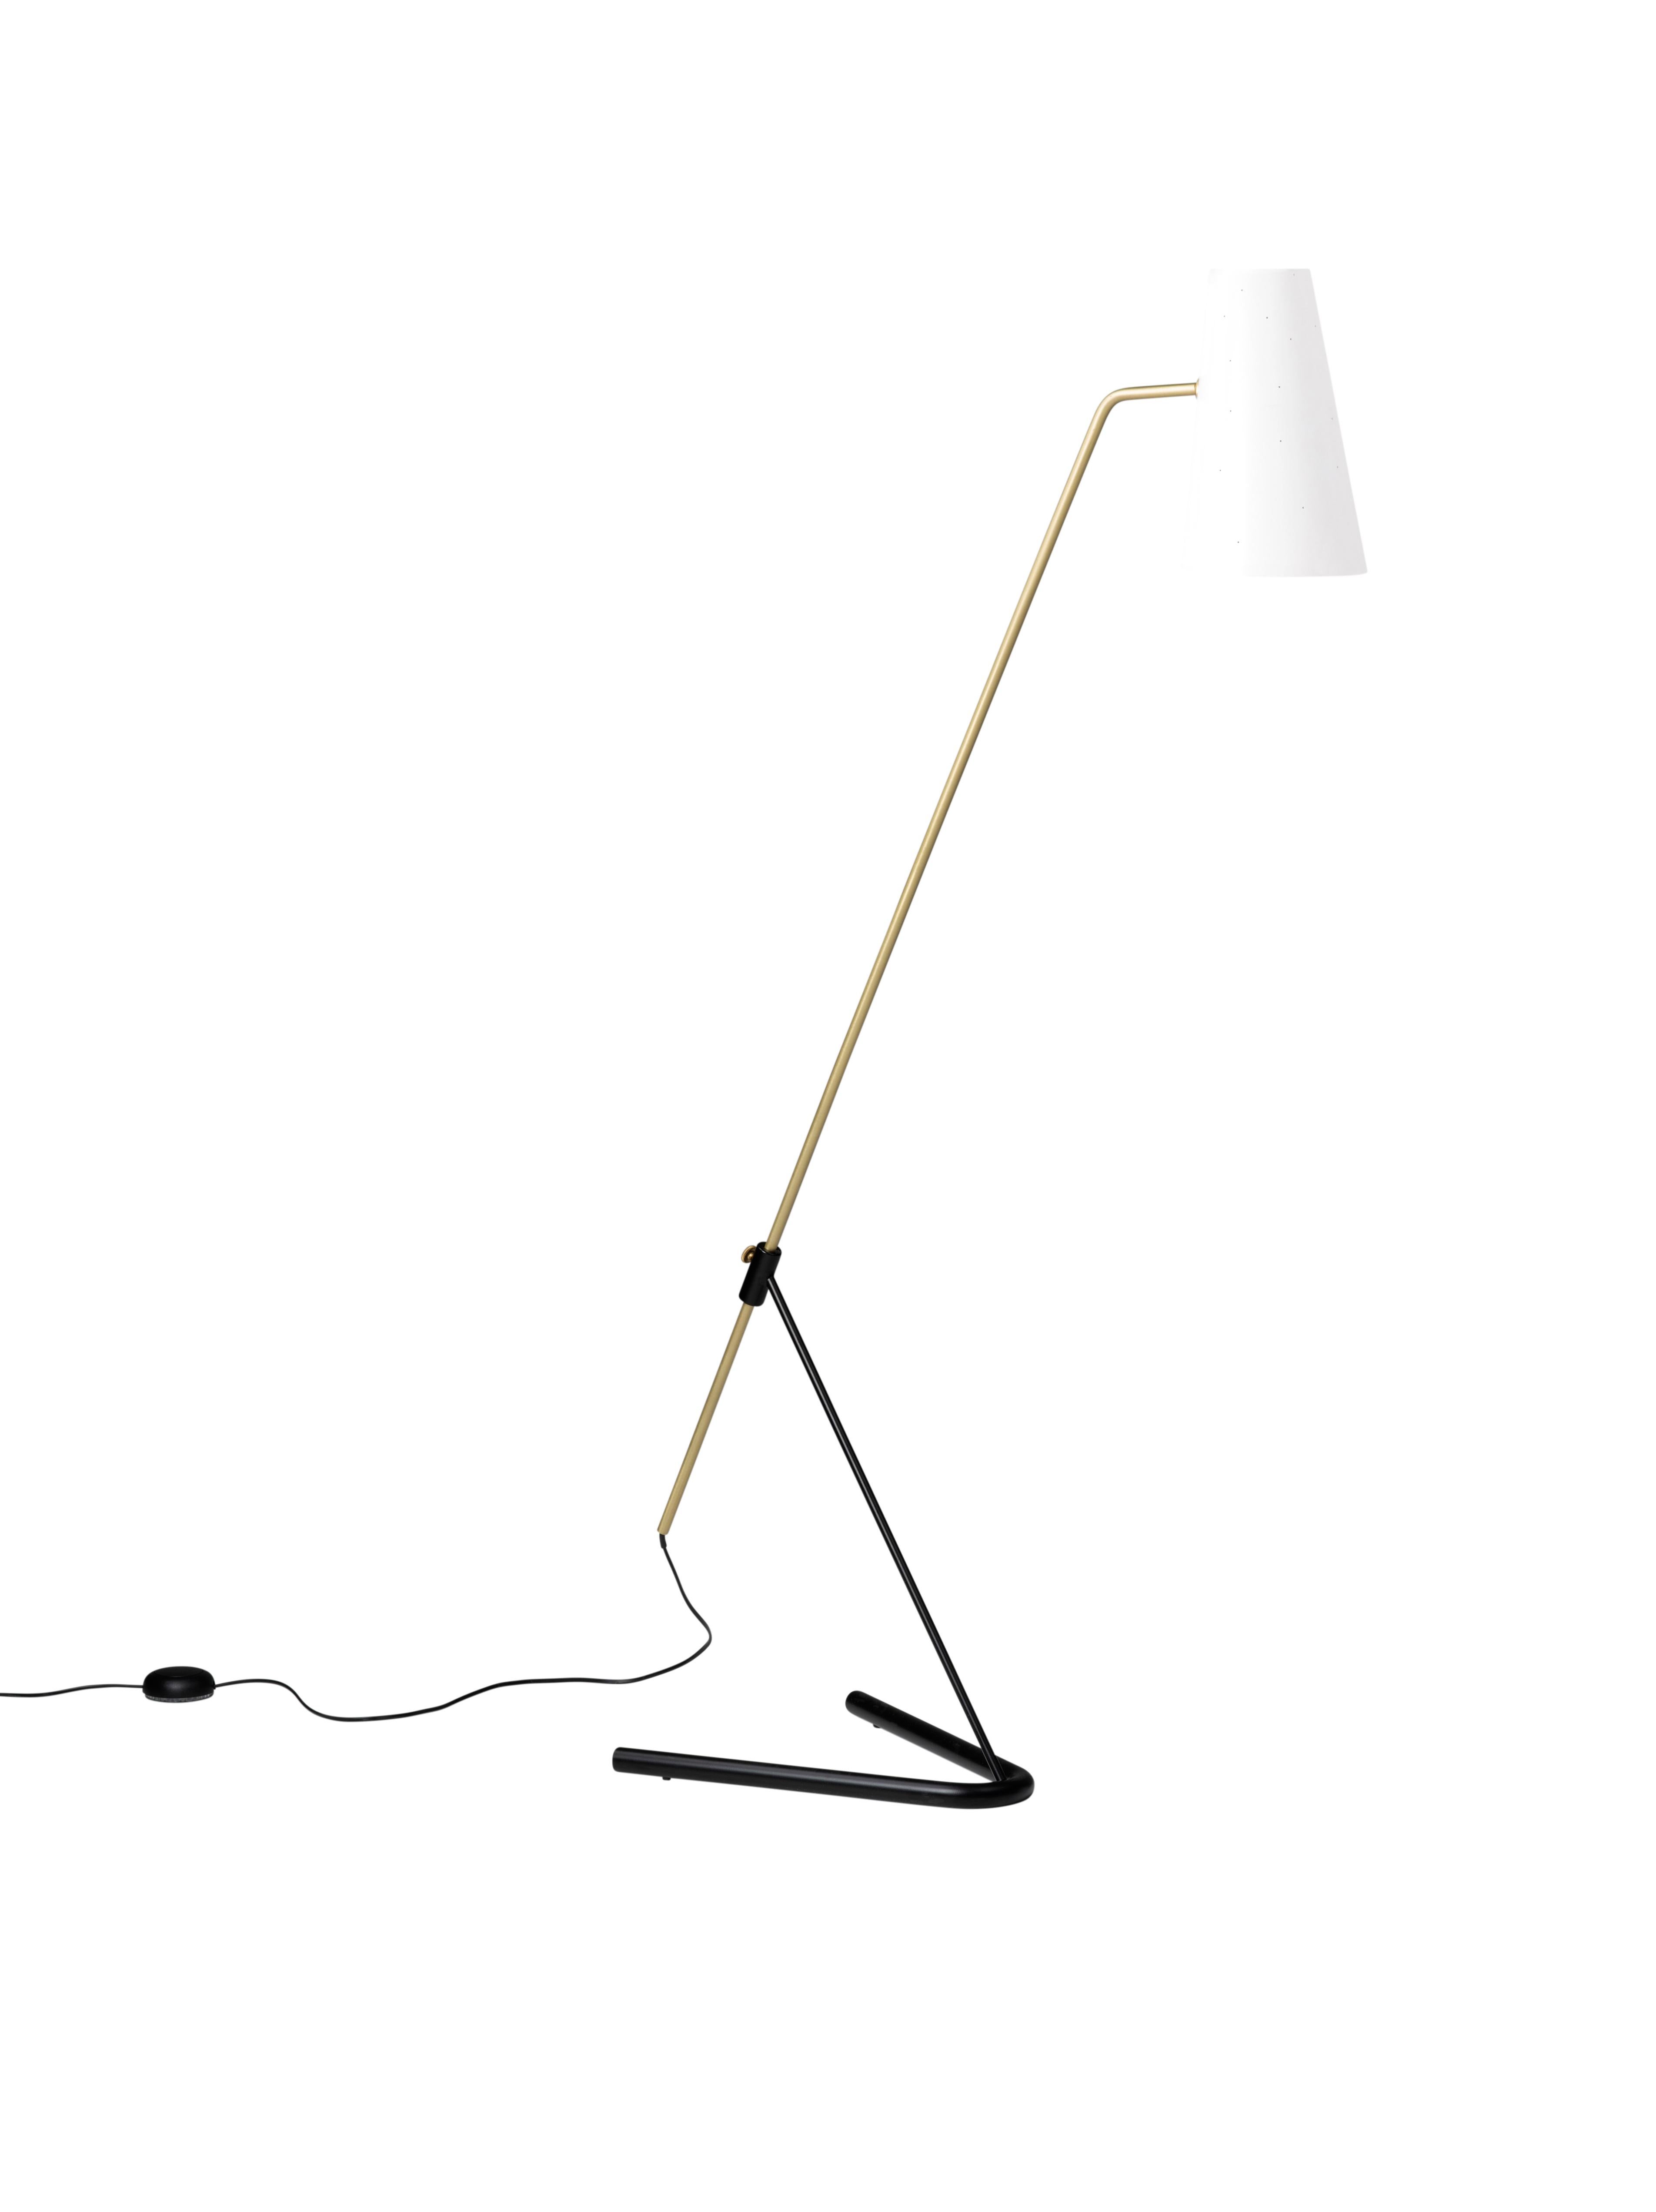 Steel Pierre Guariche 'G21' Adjustable Floor Lamp for Sammode Studio in White For Sale